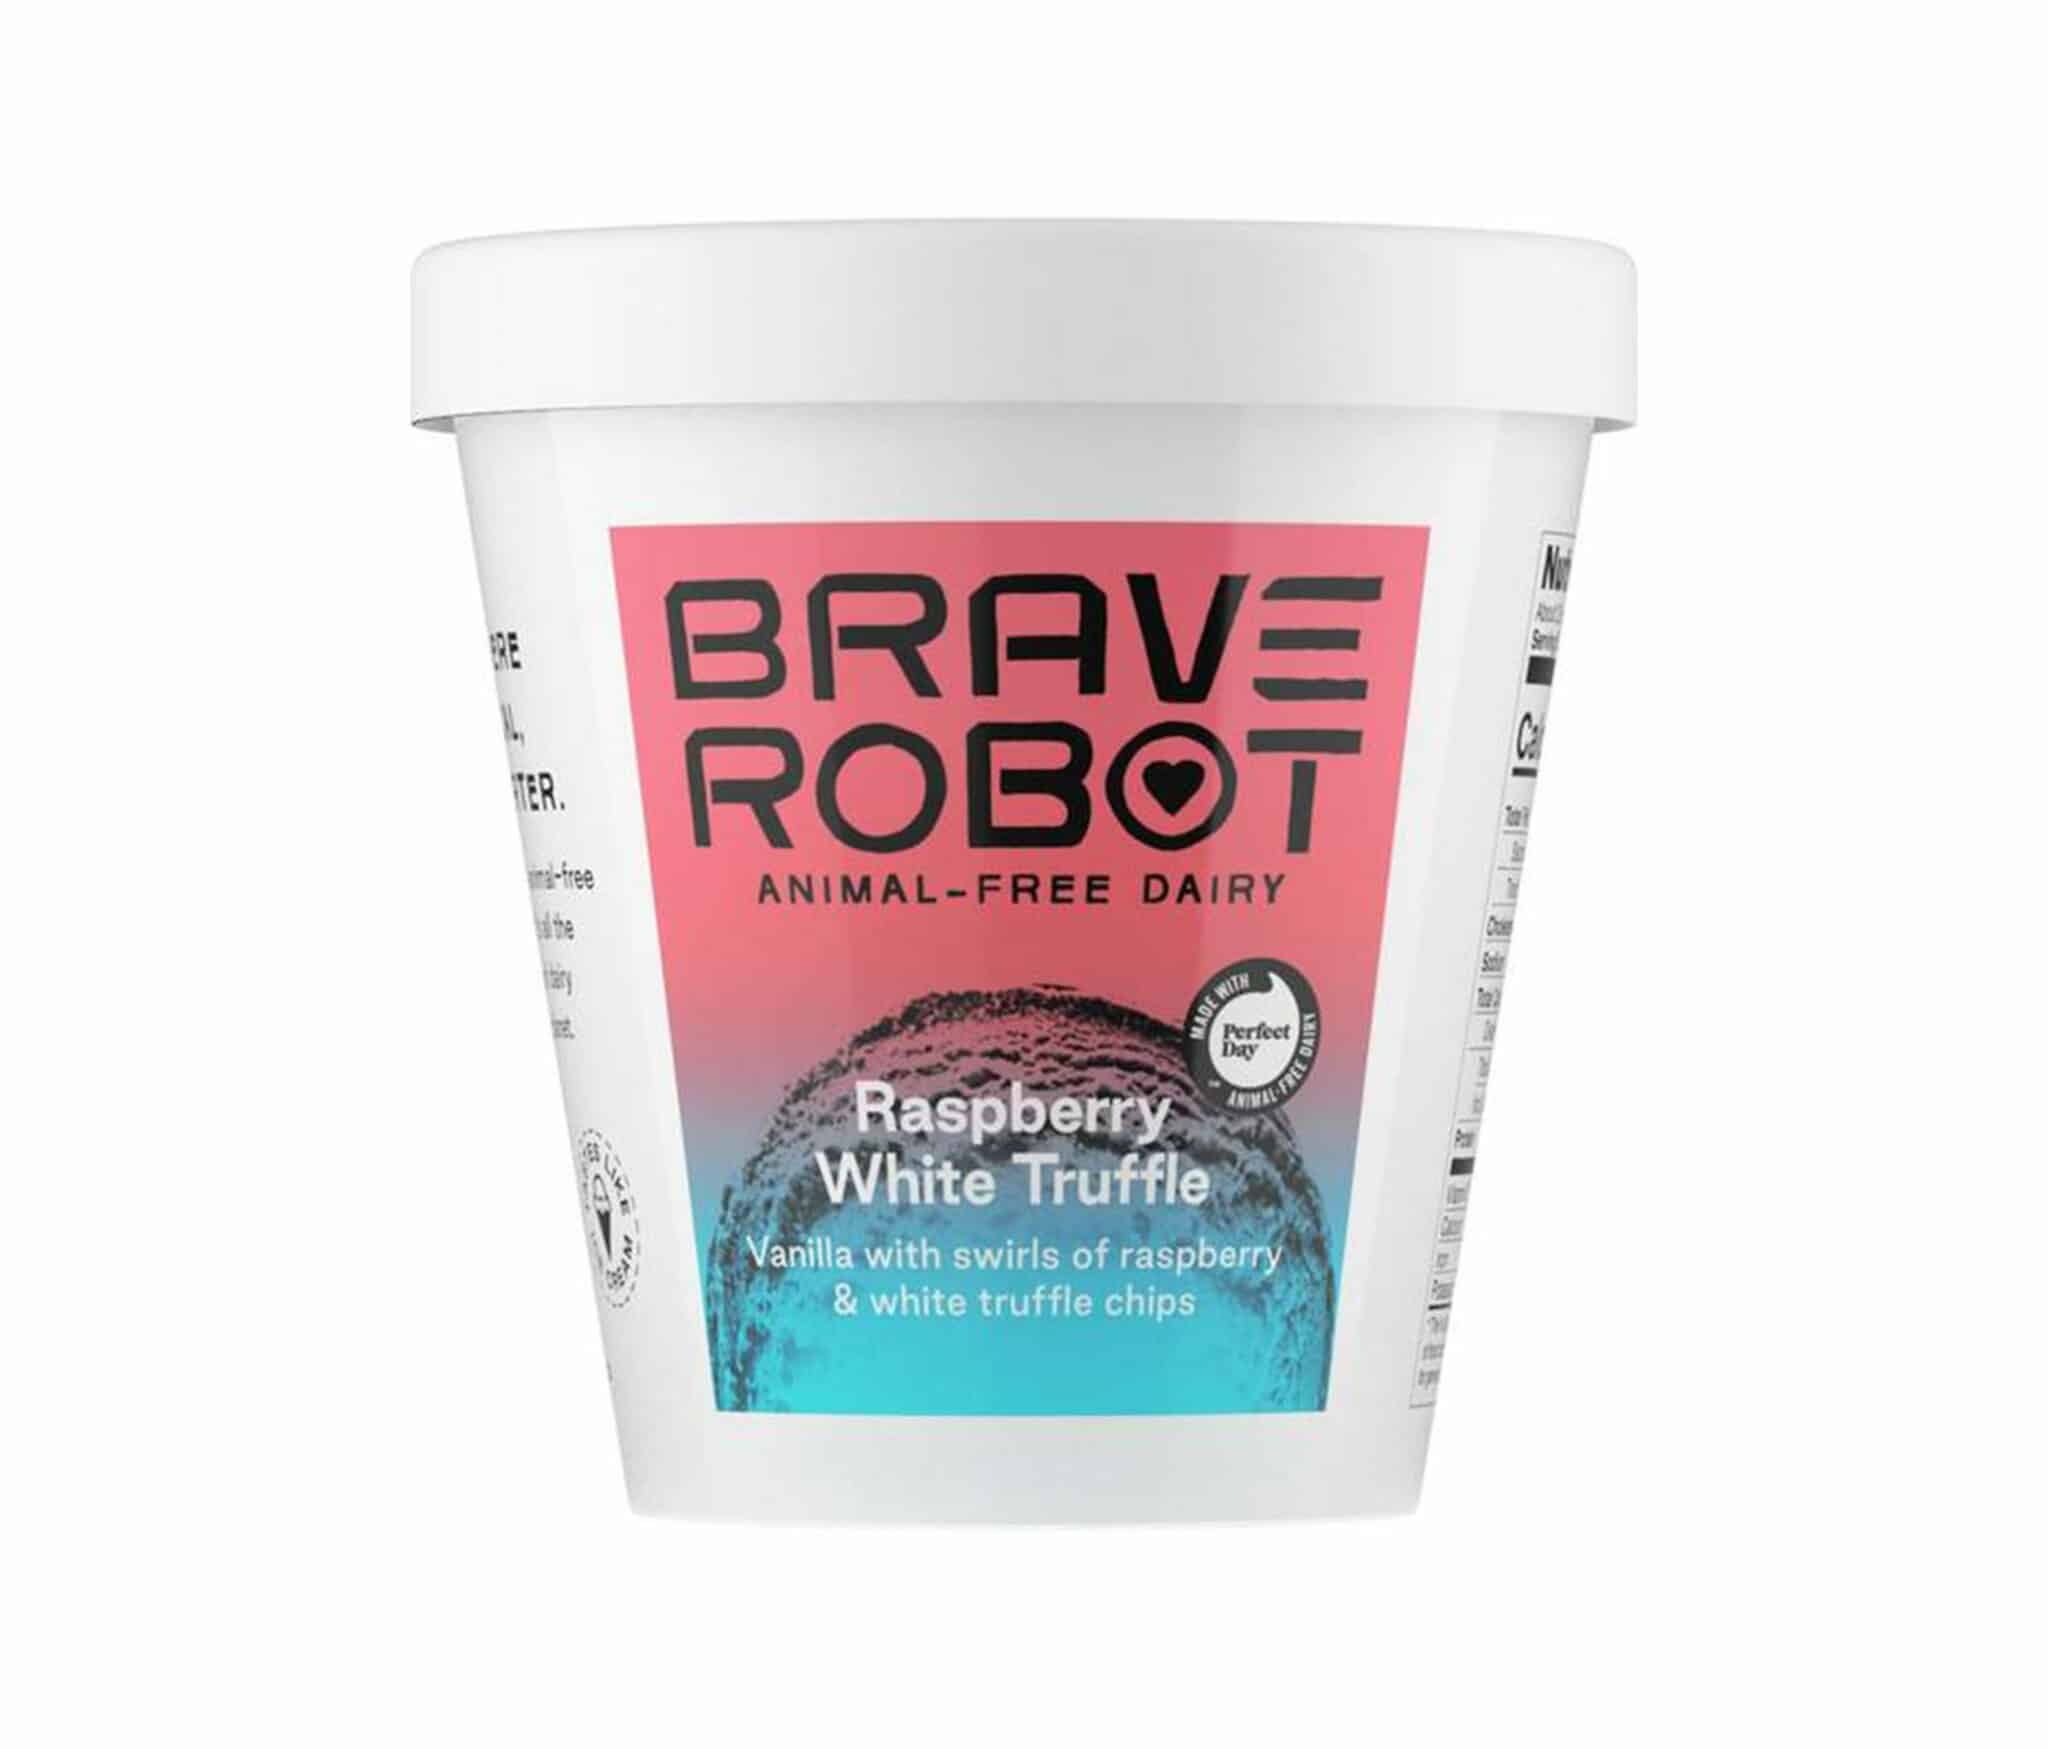 is brave robot vegan